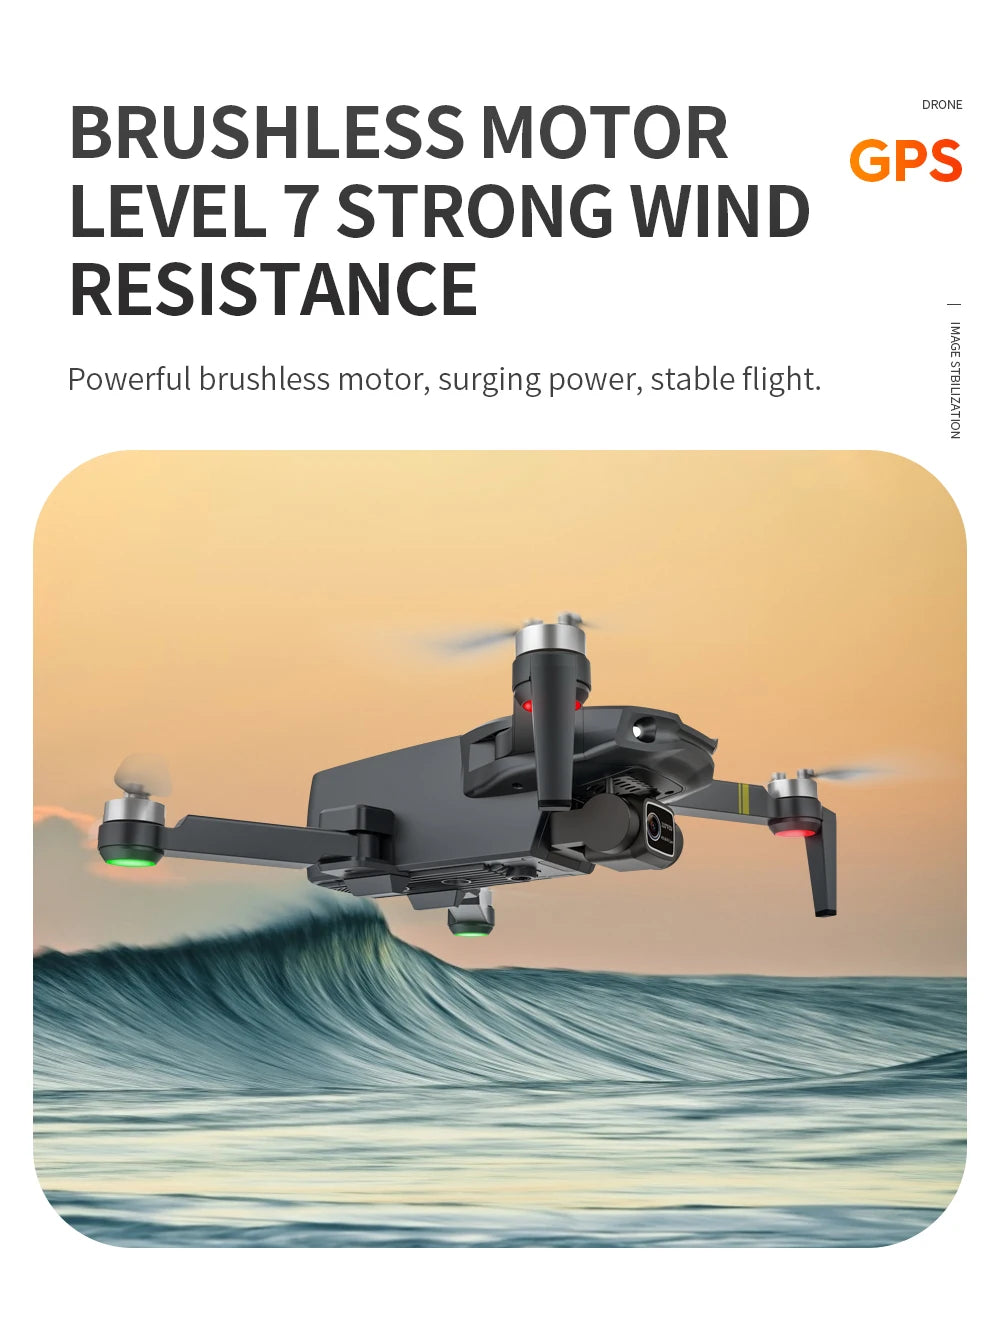 WYFA X3 Drone, GPS LEVEL 7 STRONG WIND RESISTANCE 1 Powerful brushless motor